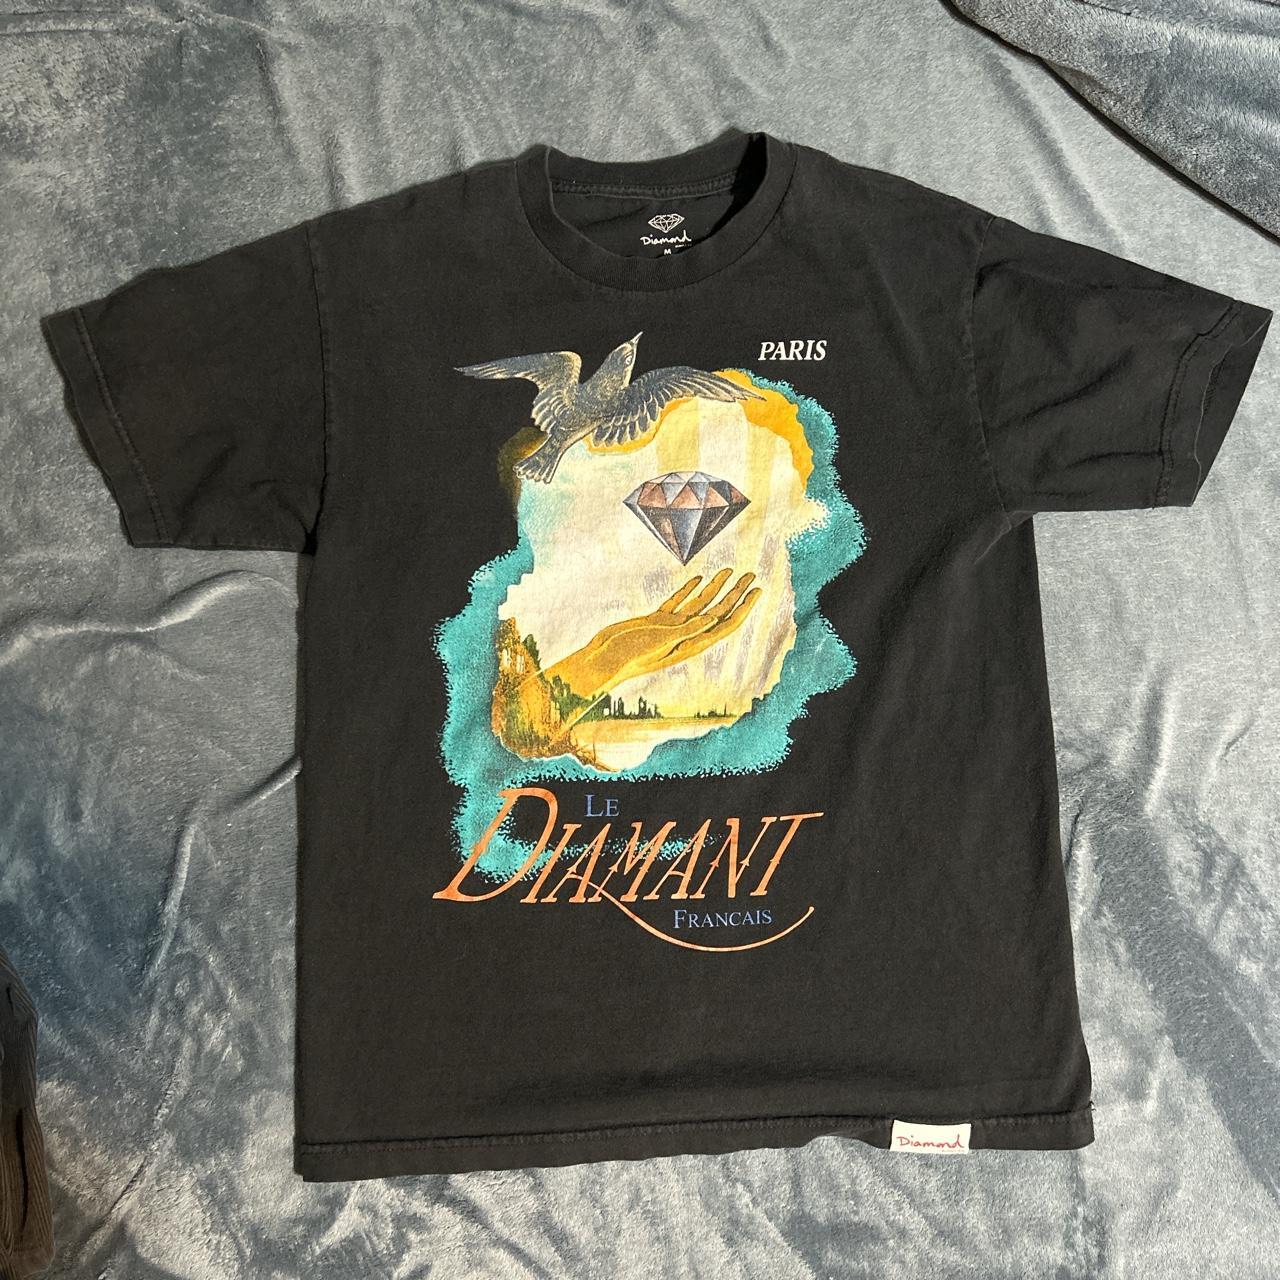 Diamond Supply Co. Men's T-shirt